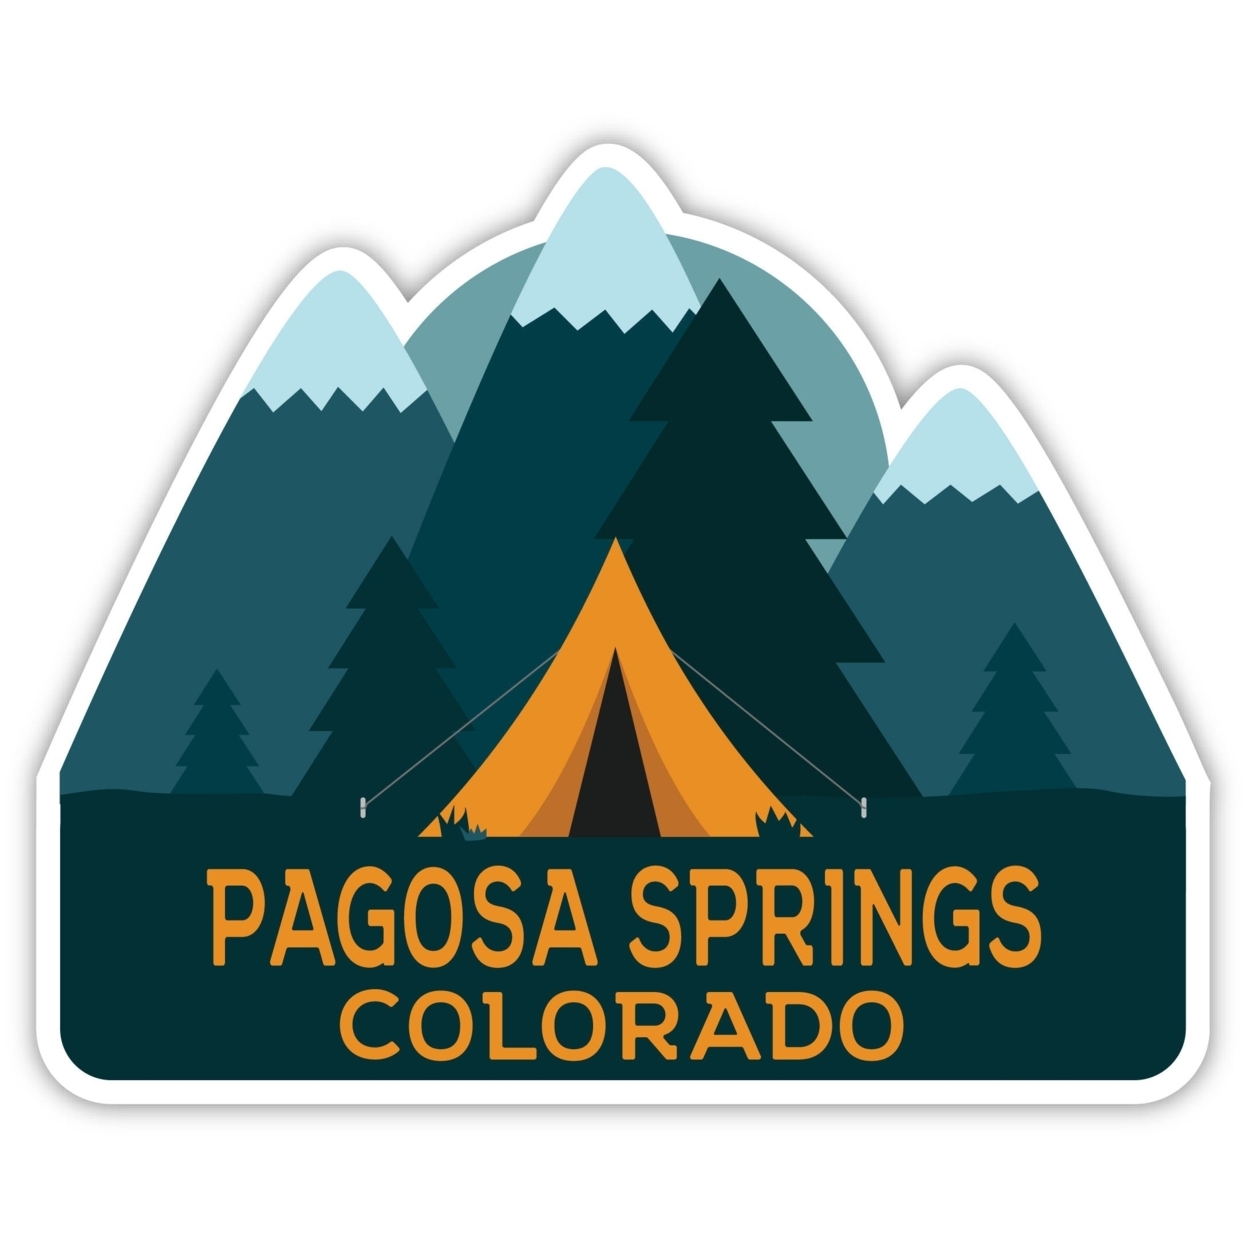 Pagosa Springs Colorado Souvenir Decorative Stickers (Choose Theme And Size) - Single Unit, 4-Inch, Tent